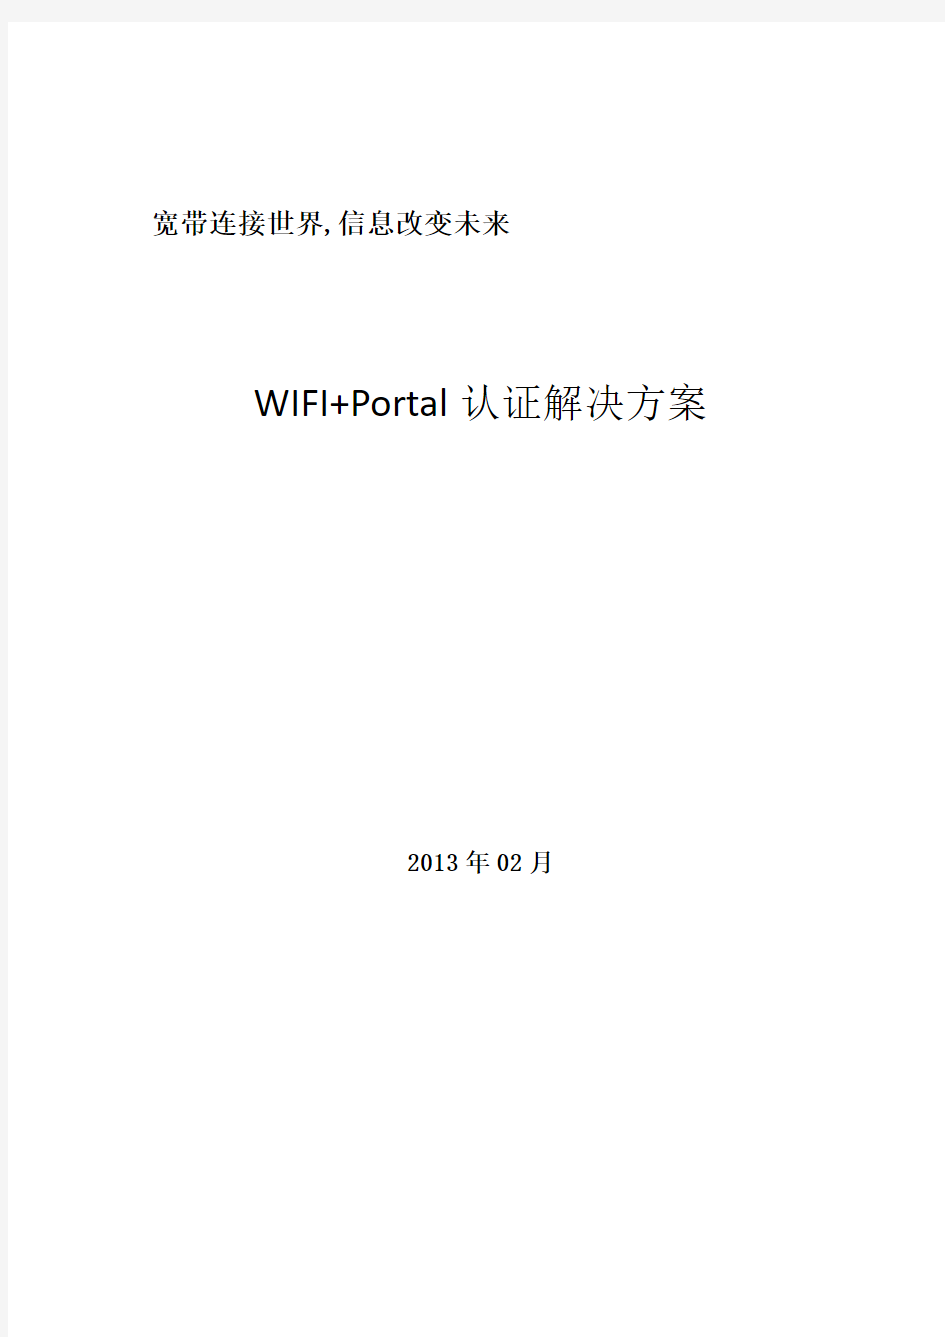 WIFI+Portal认证解决方案_高可靠性